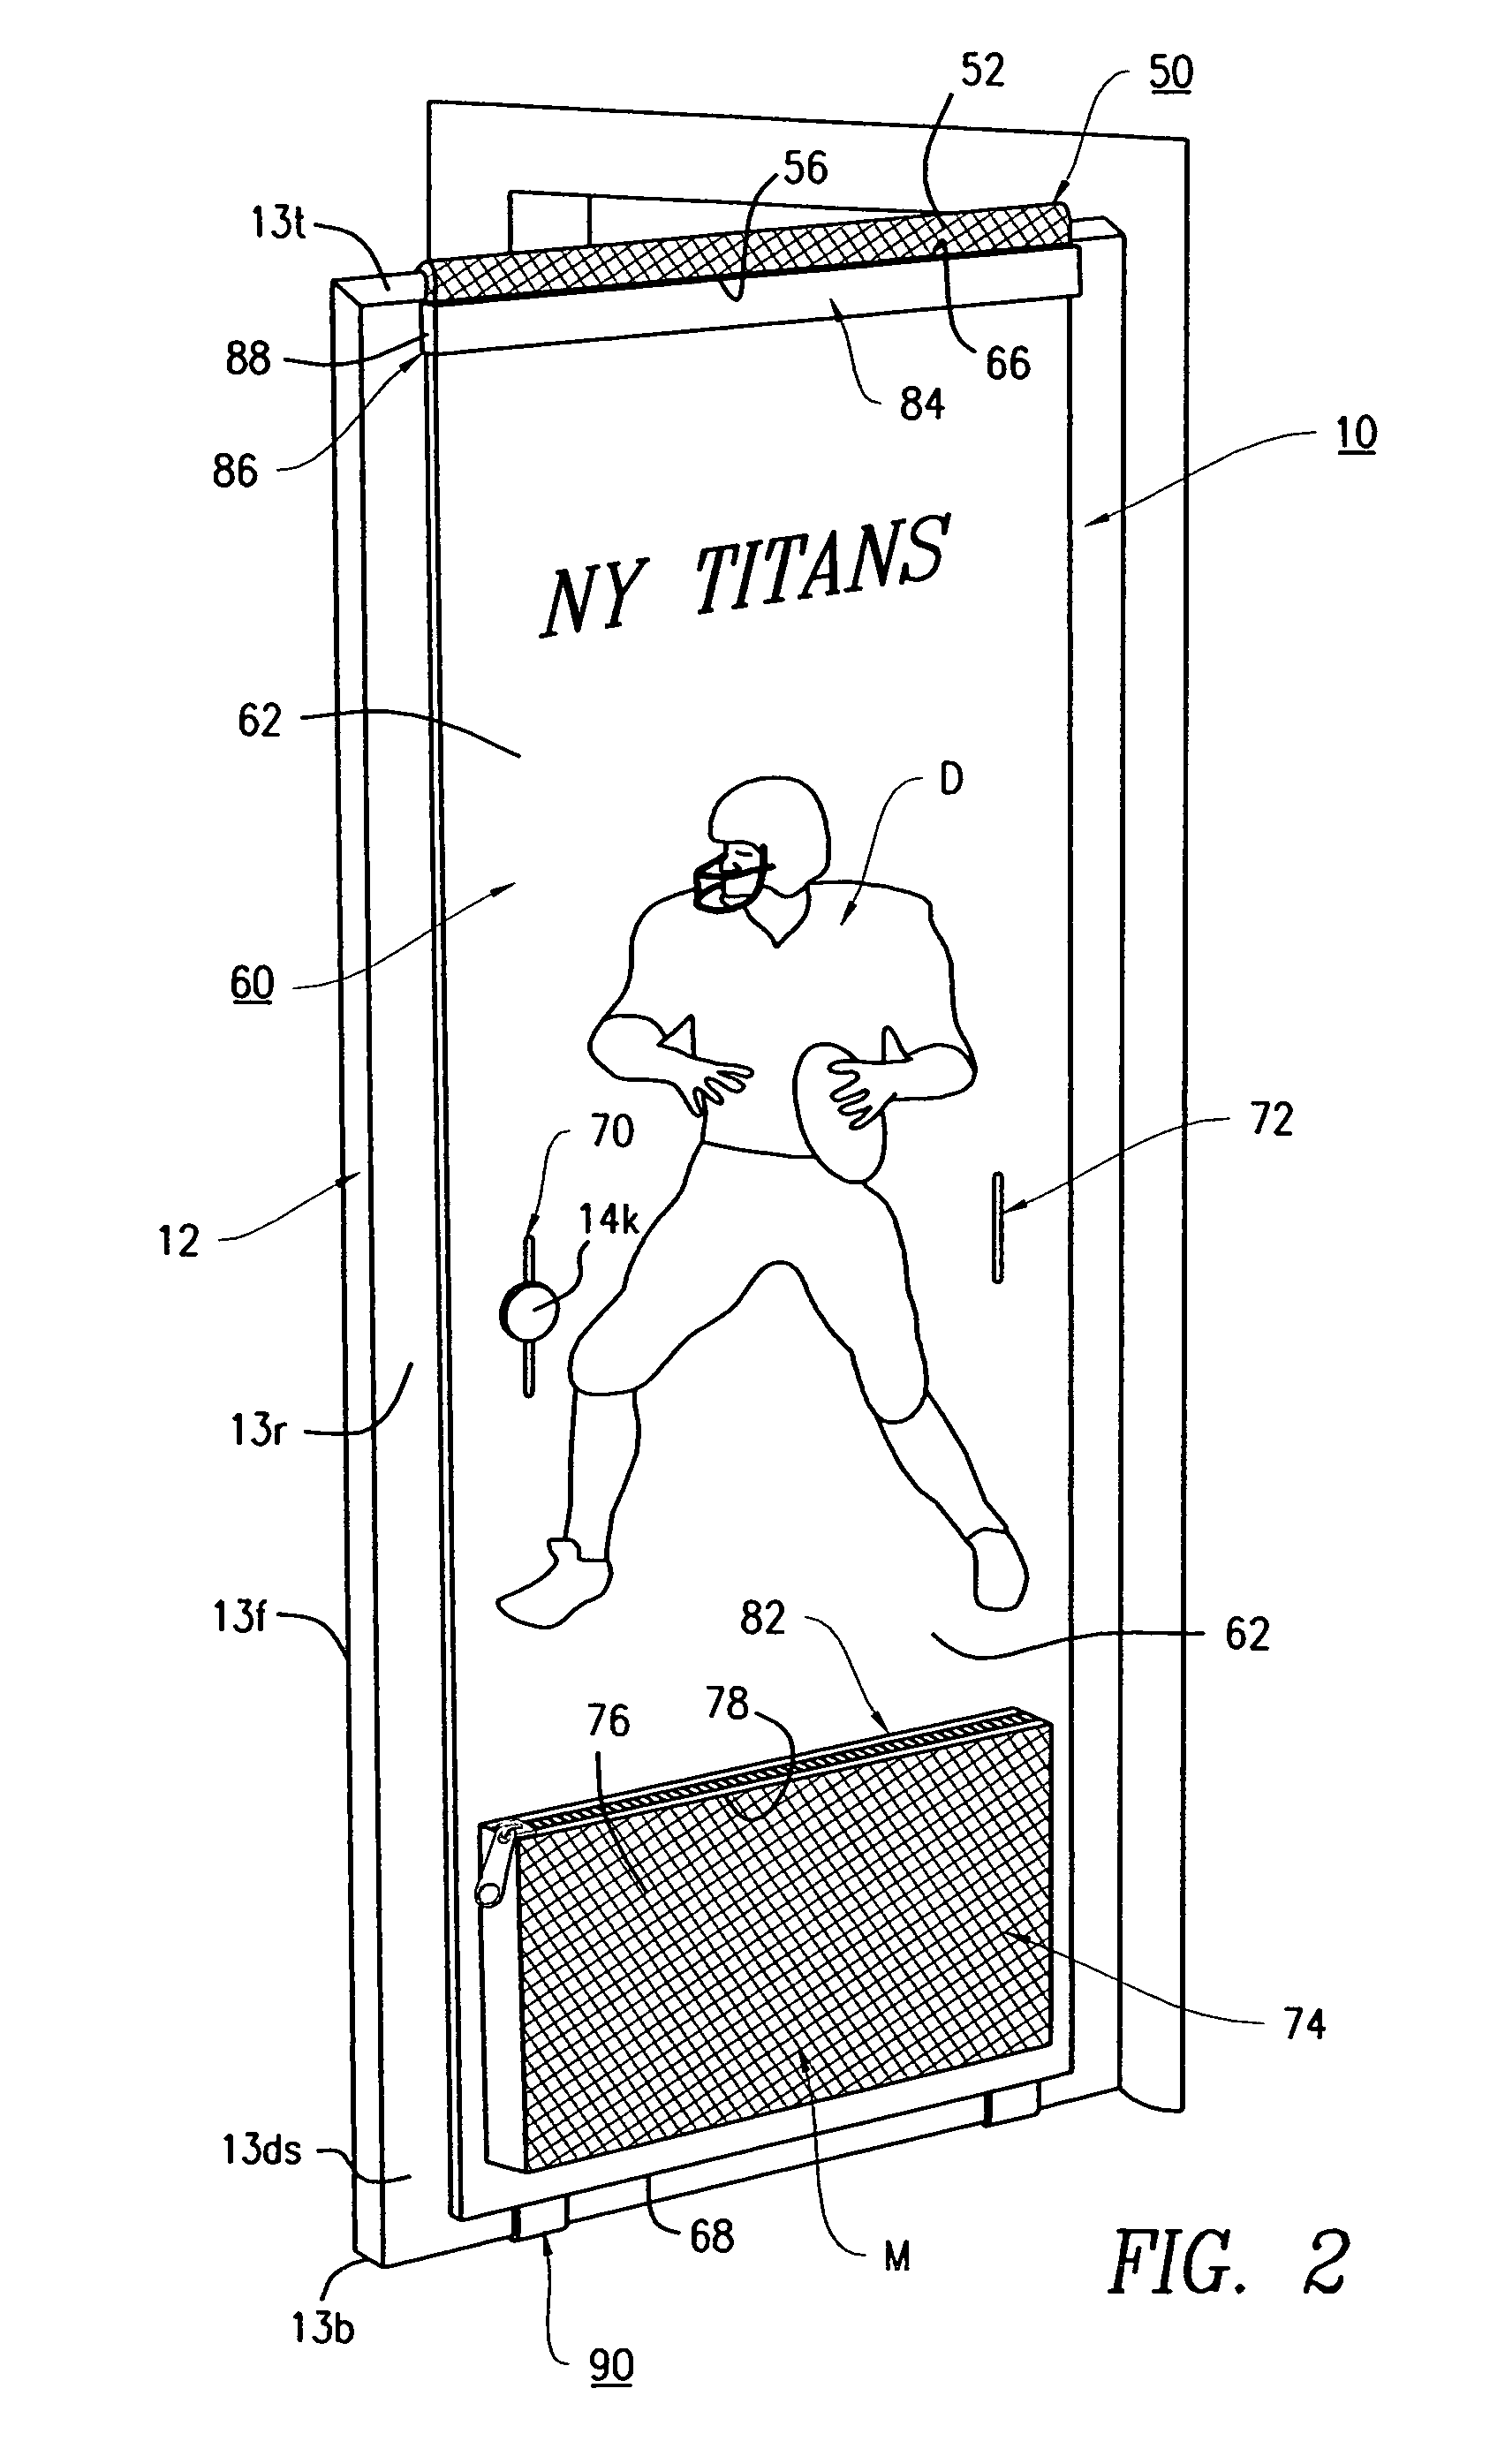 Door cover with storage pockets